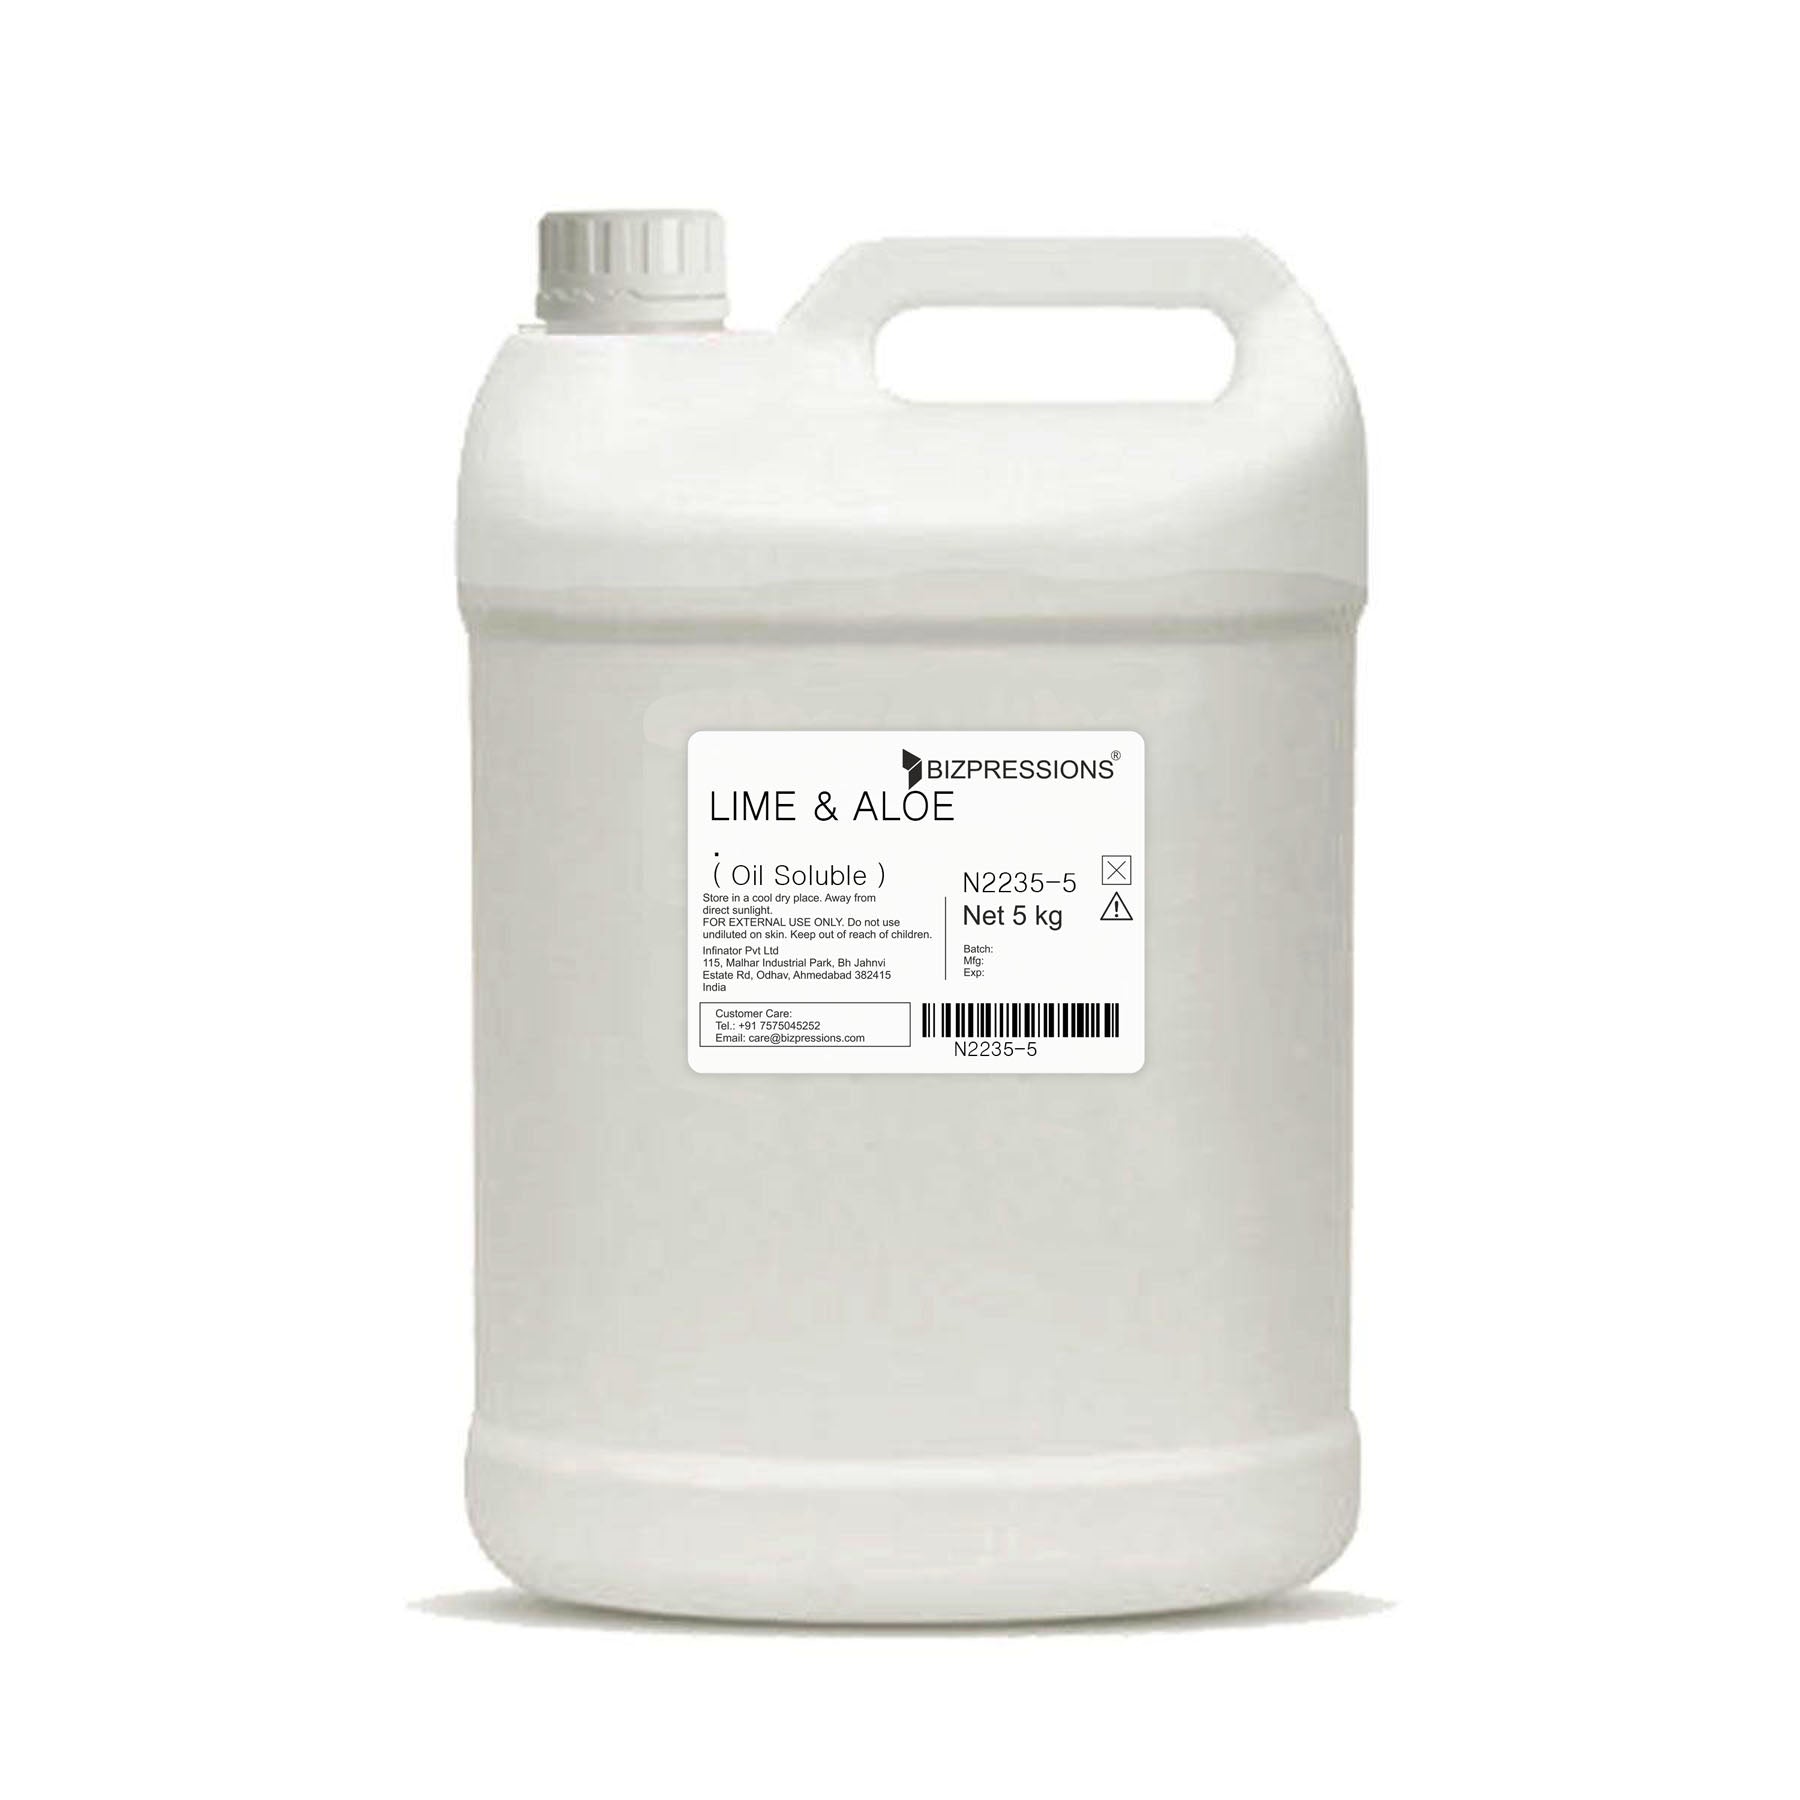 LIME & ALOE - Fragrance ( Oil Soluble ) - 5 kg